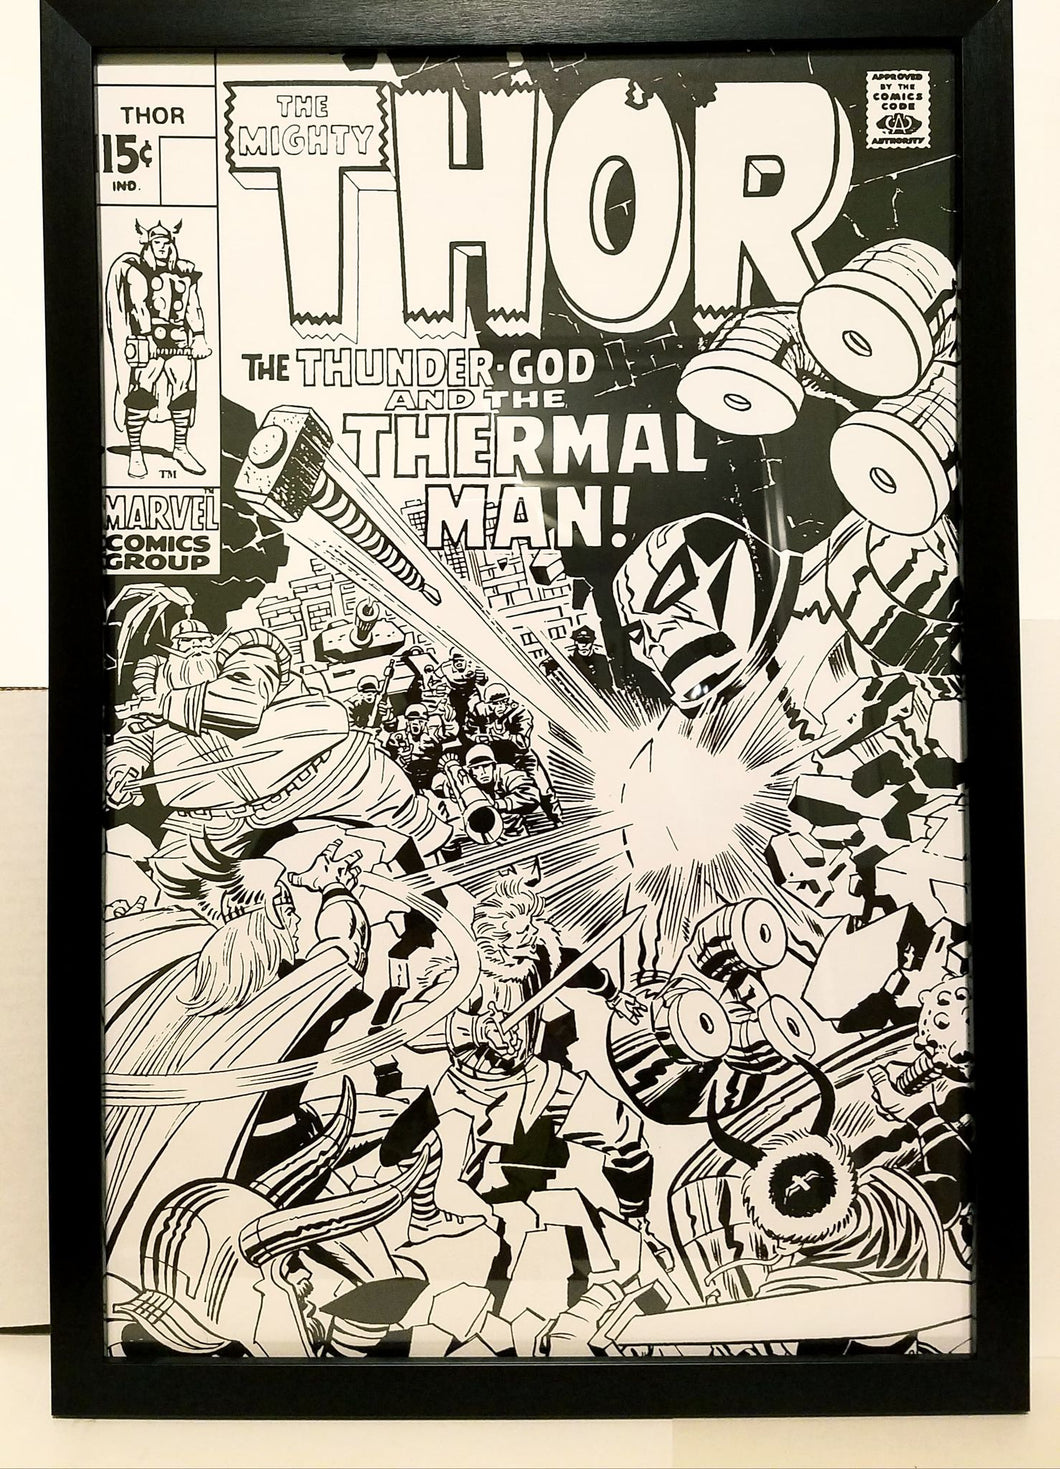 Thor #170 Variant by Jack Kirby 12x18 FRAMED Marvel Comics Vintage Art Print Poster